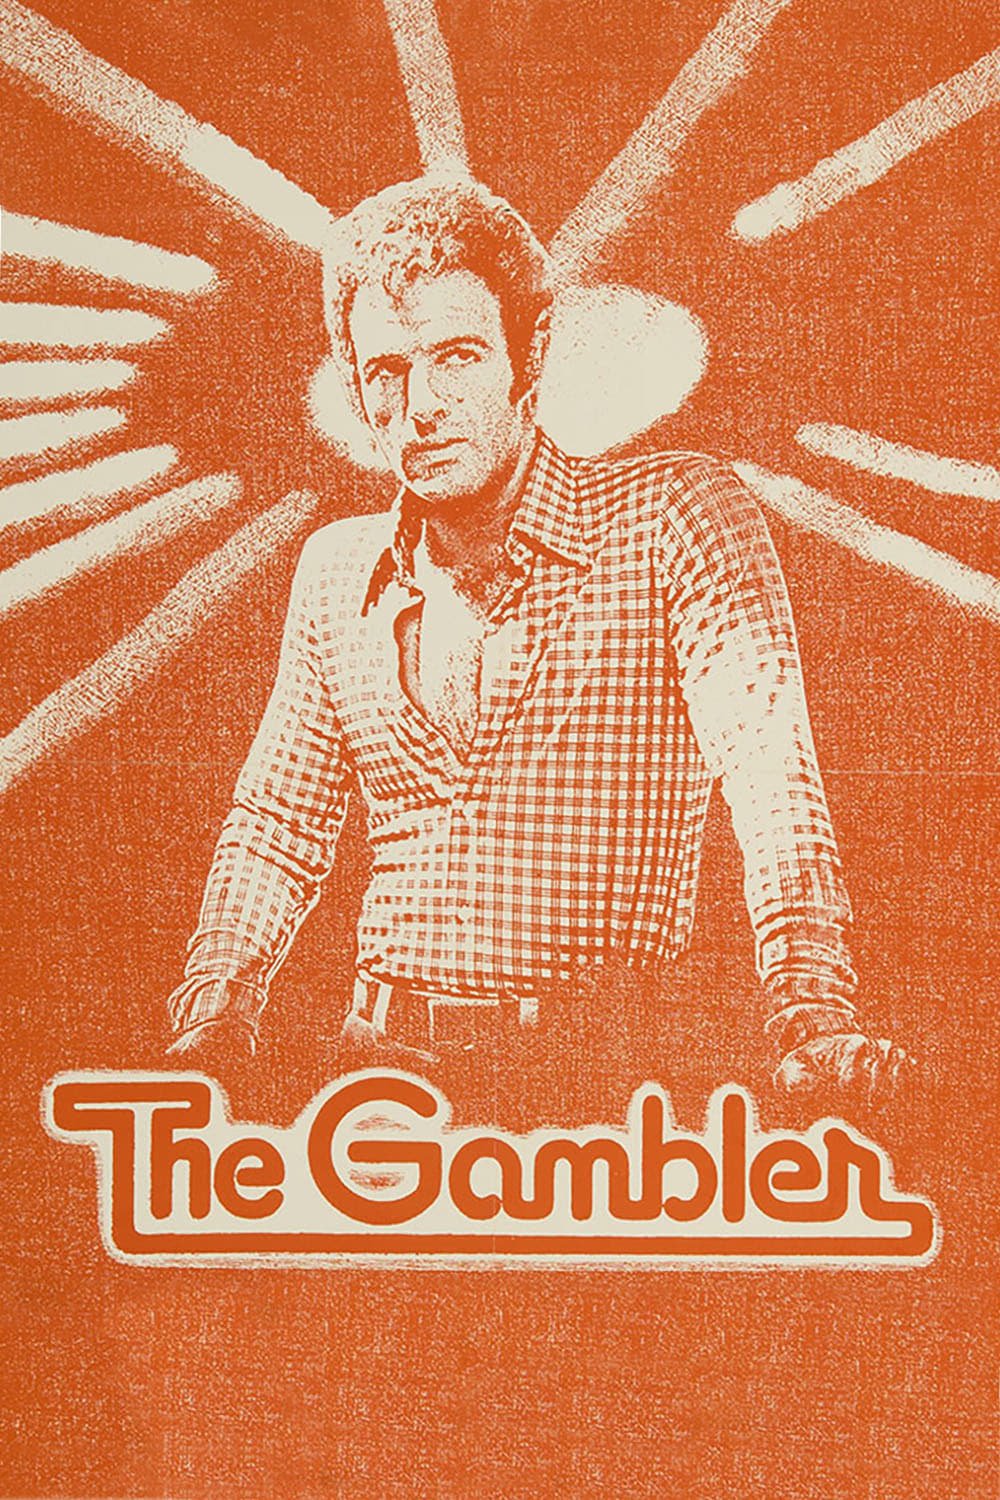 Spieler ohne Skrupel (1974)